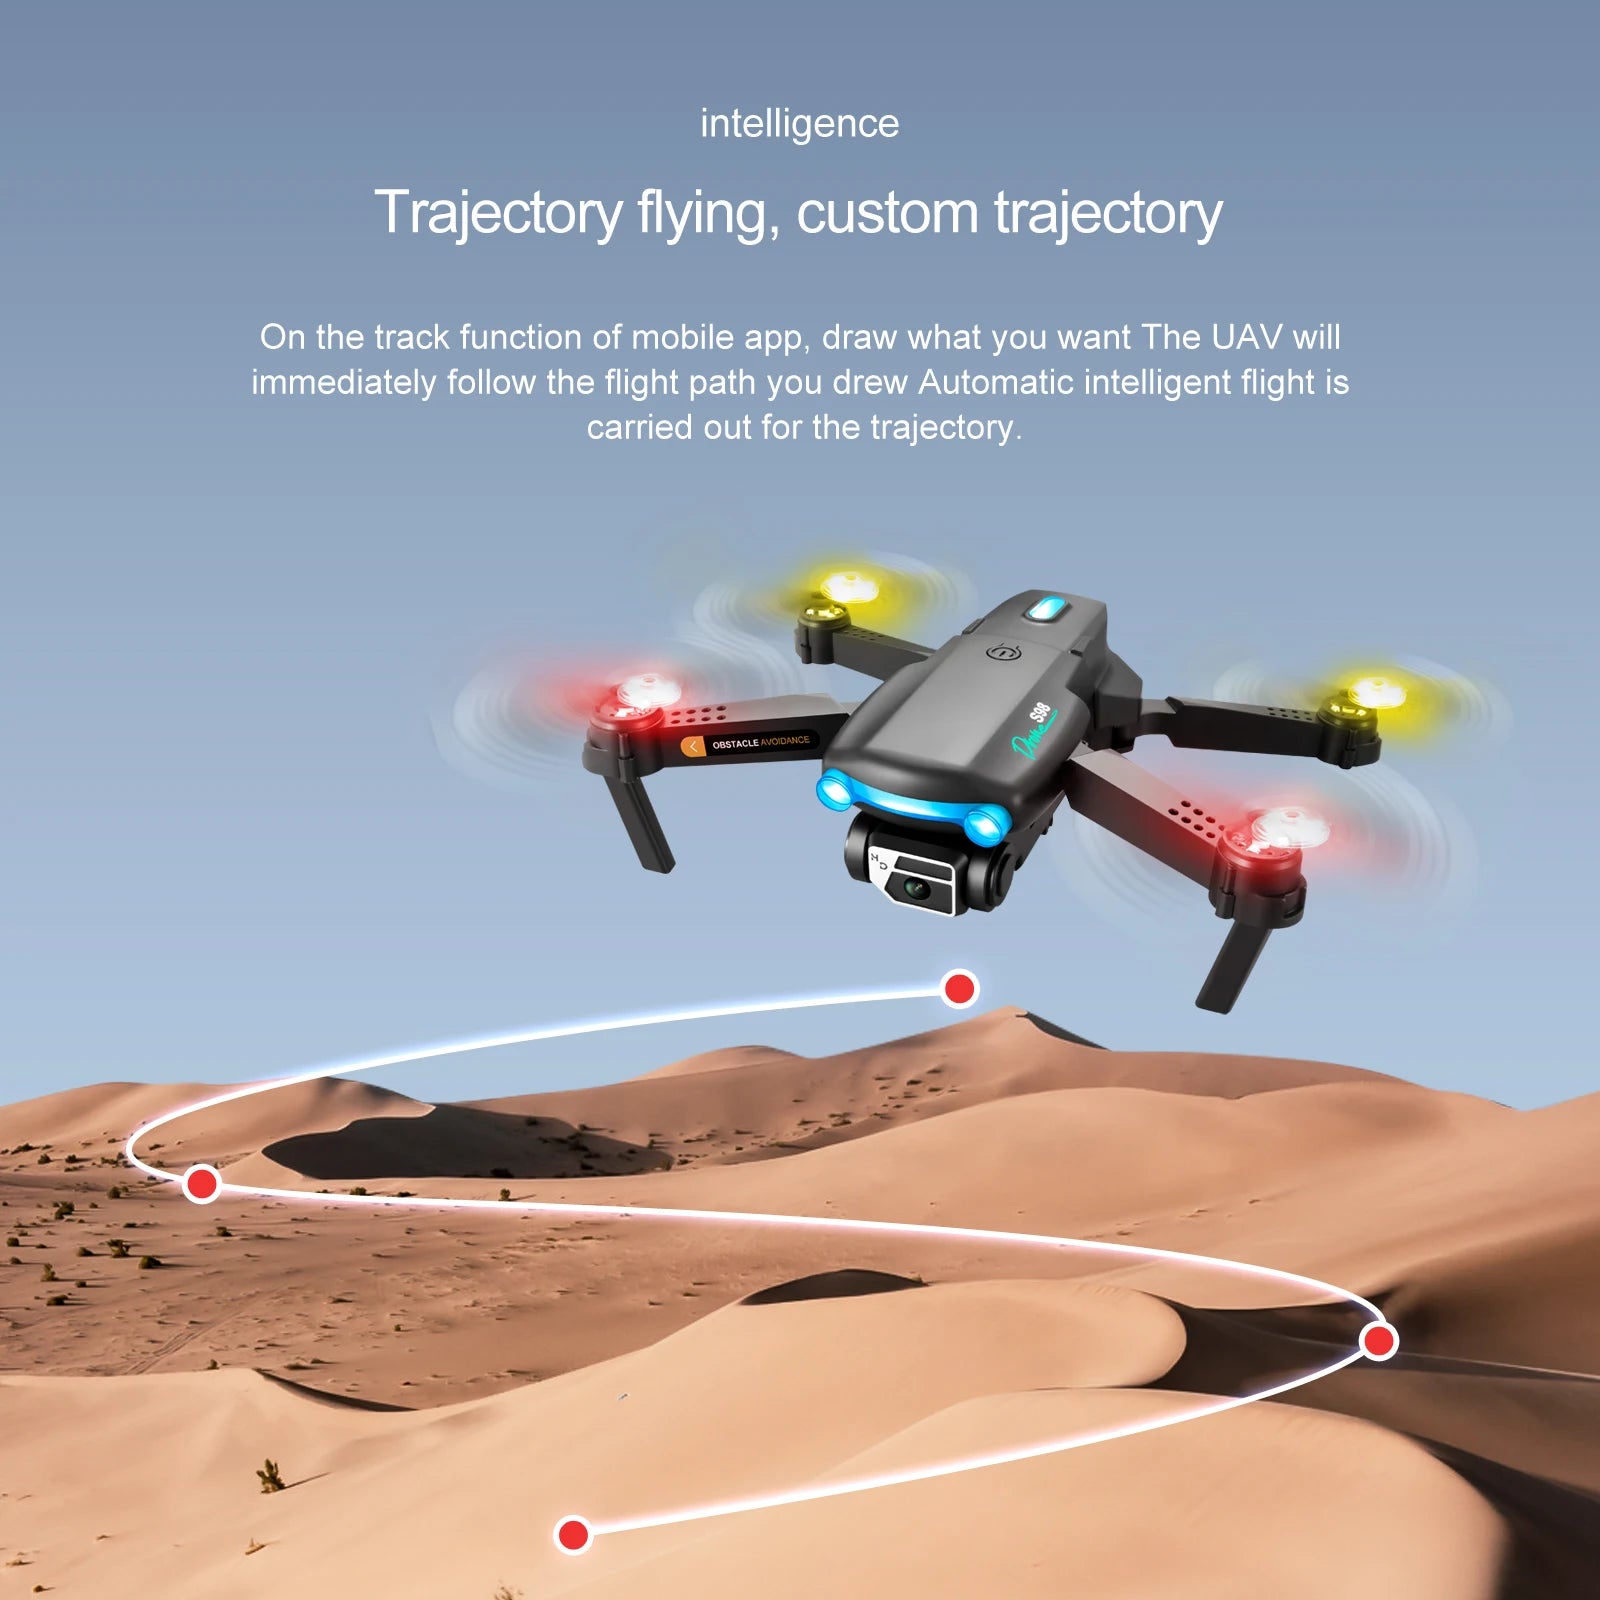 S98  Drone, uav follows the flight path you drew automatically